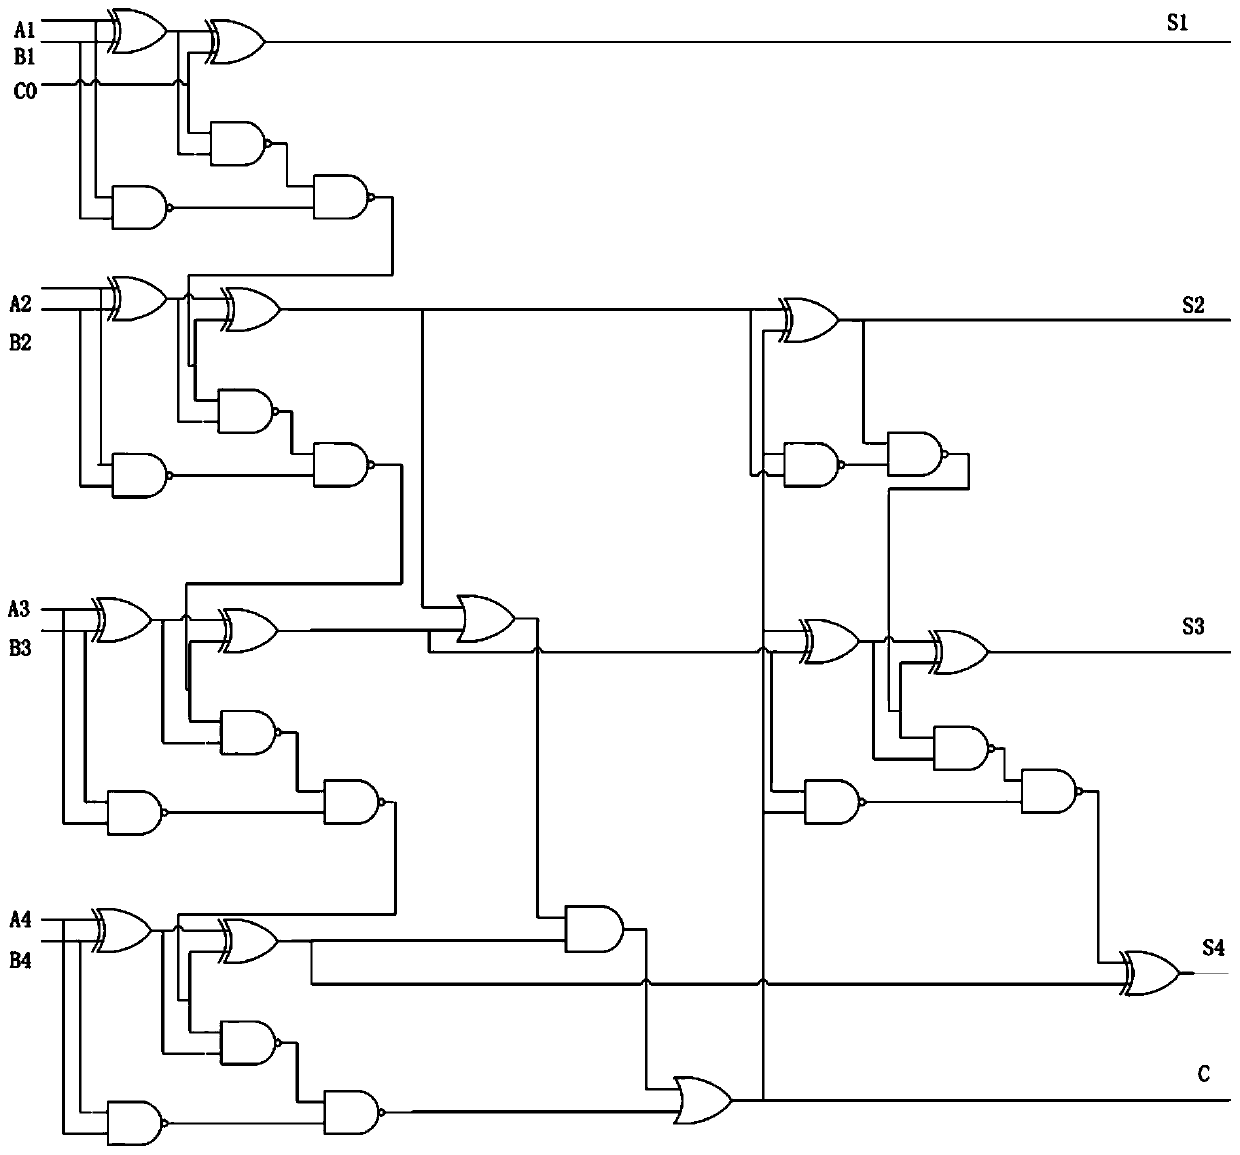 Design method of four-bit bcd code adder based on chain permutation